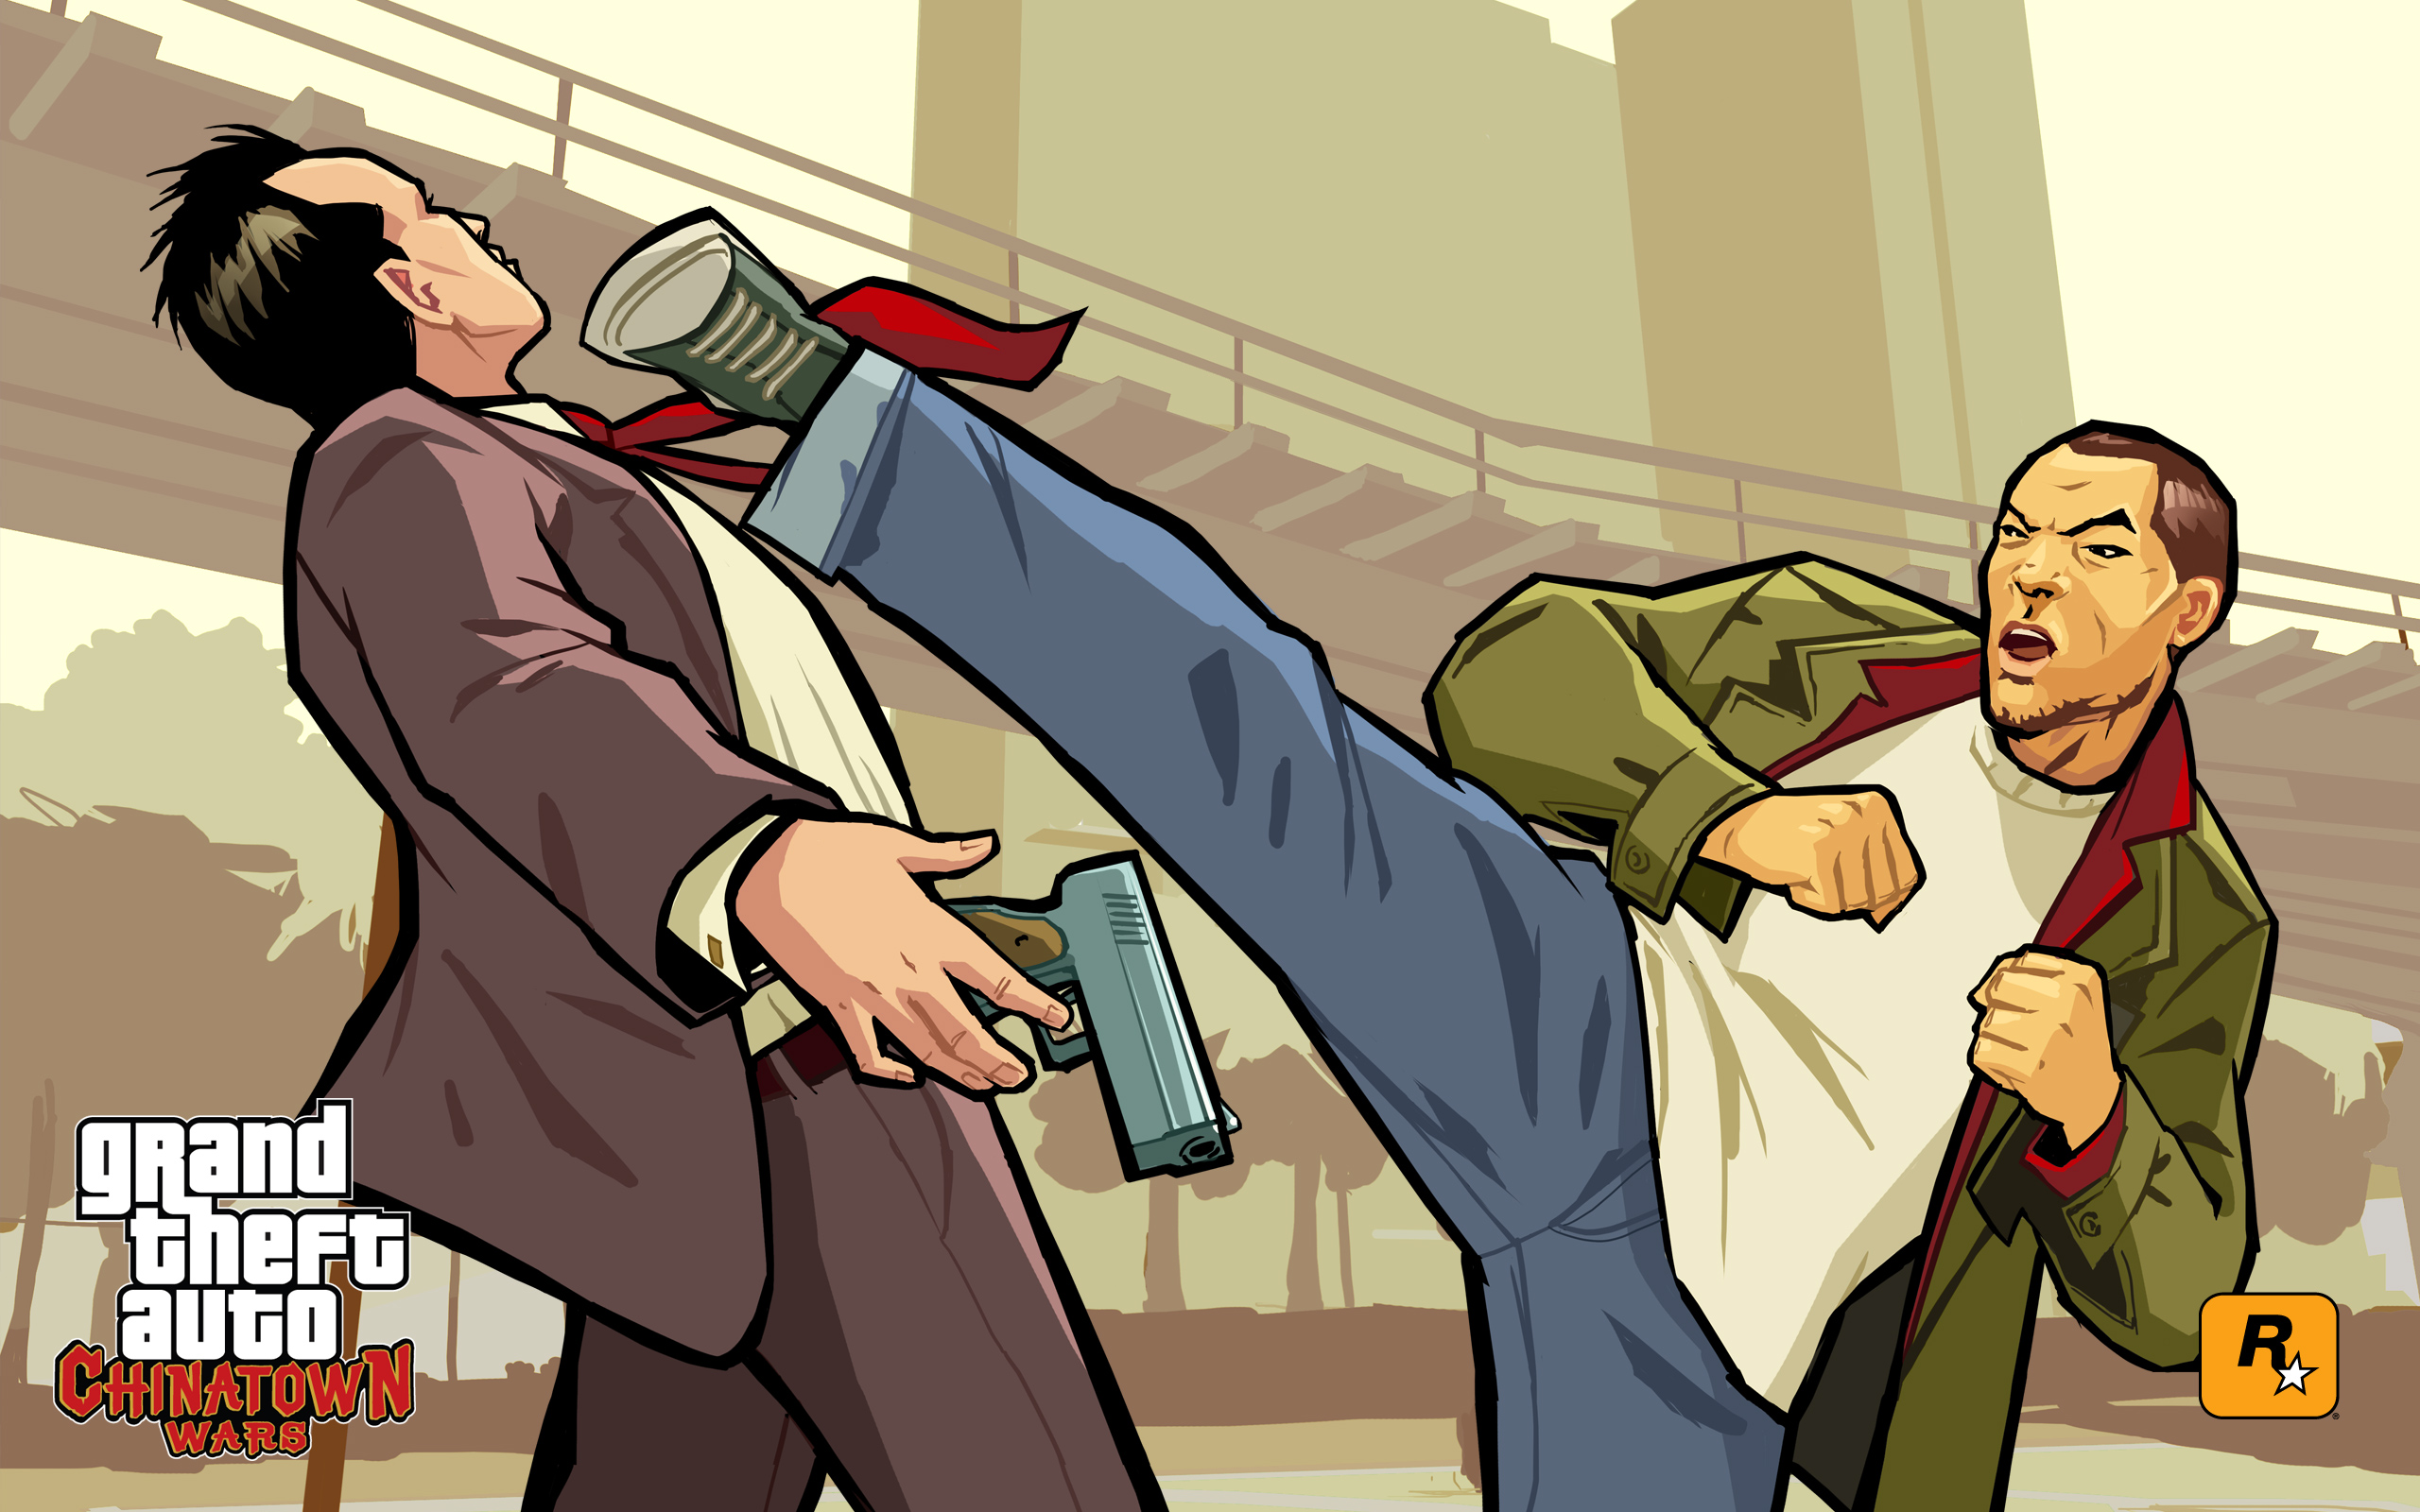 Завантажити шпалери Grand Theft Auto: Chinatown Wars на телефон безкоштовно